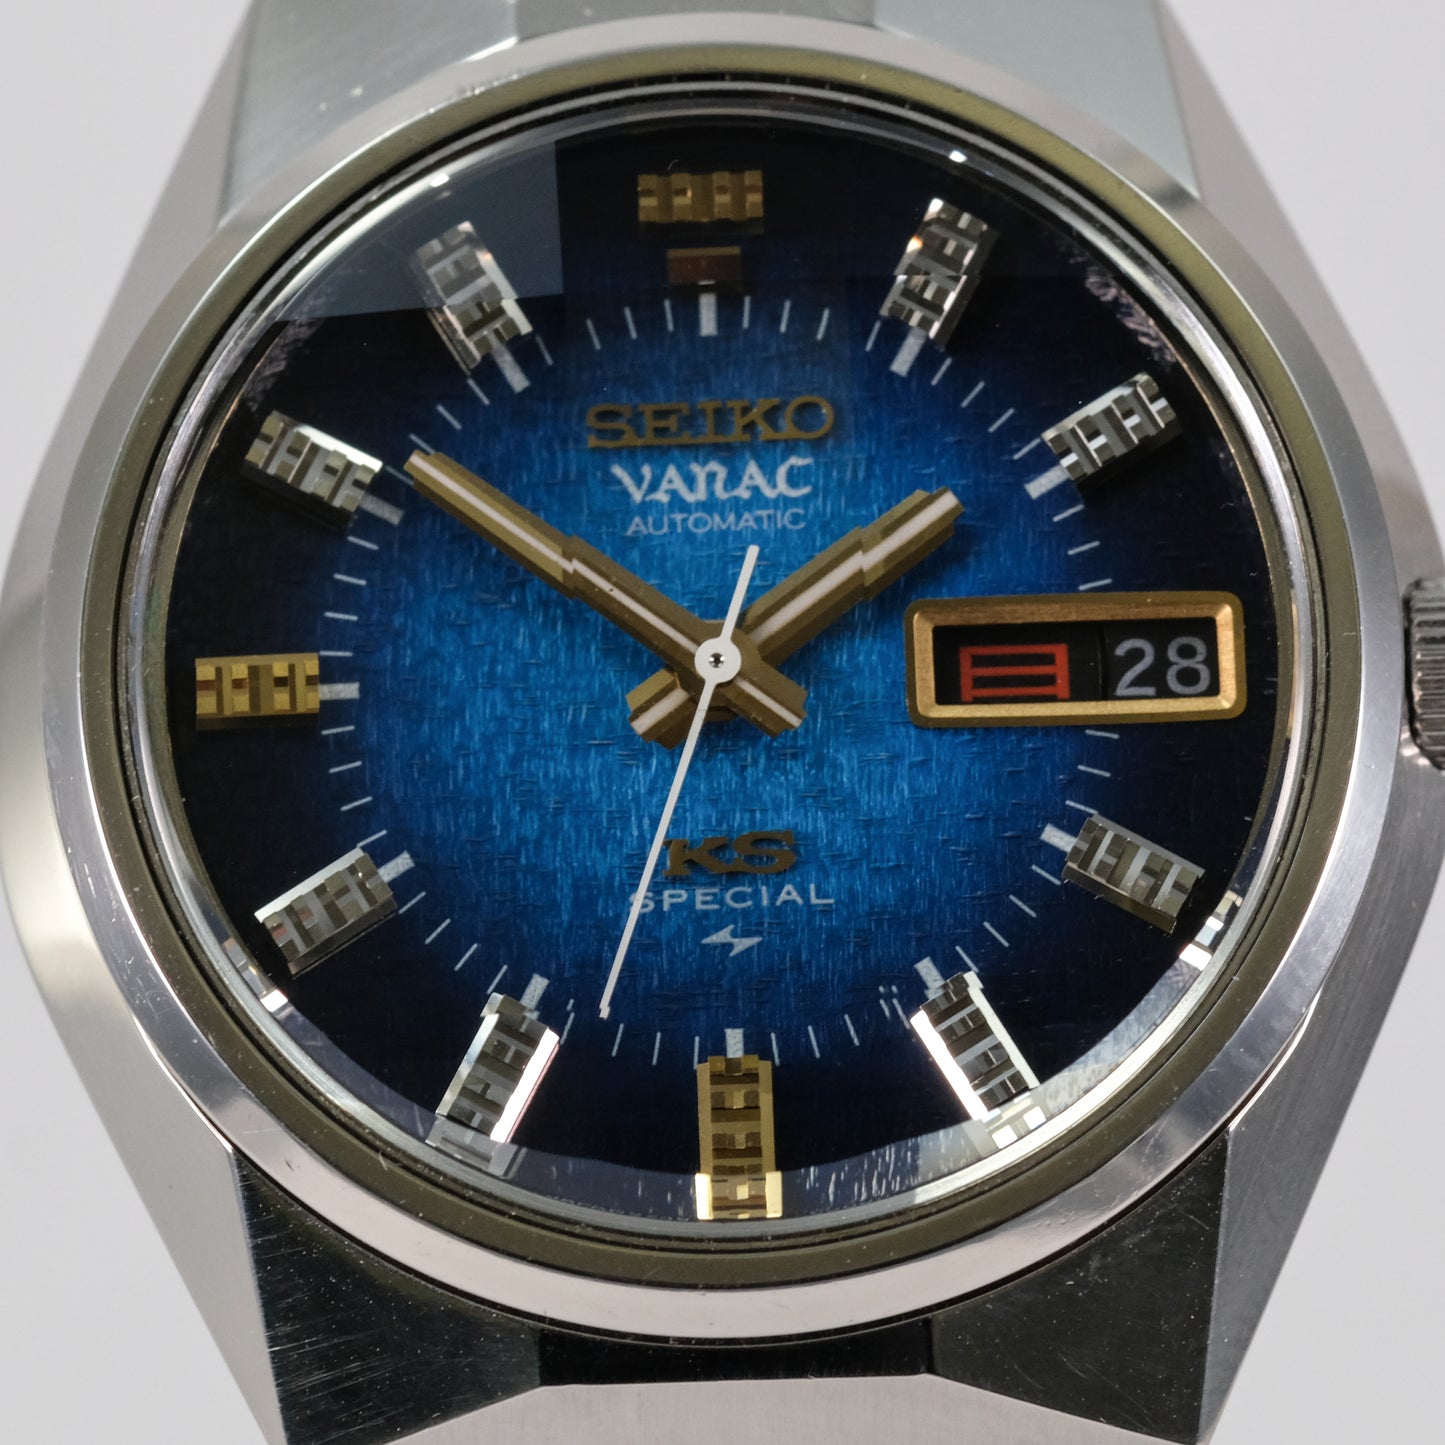 1973 Seiko KS Vanac Special 5246-6070